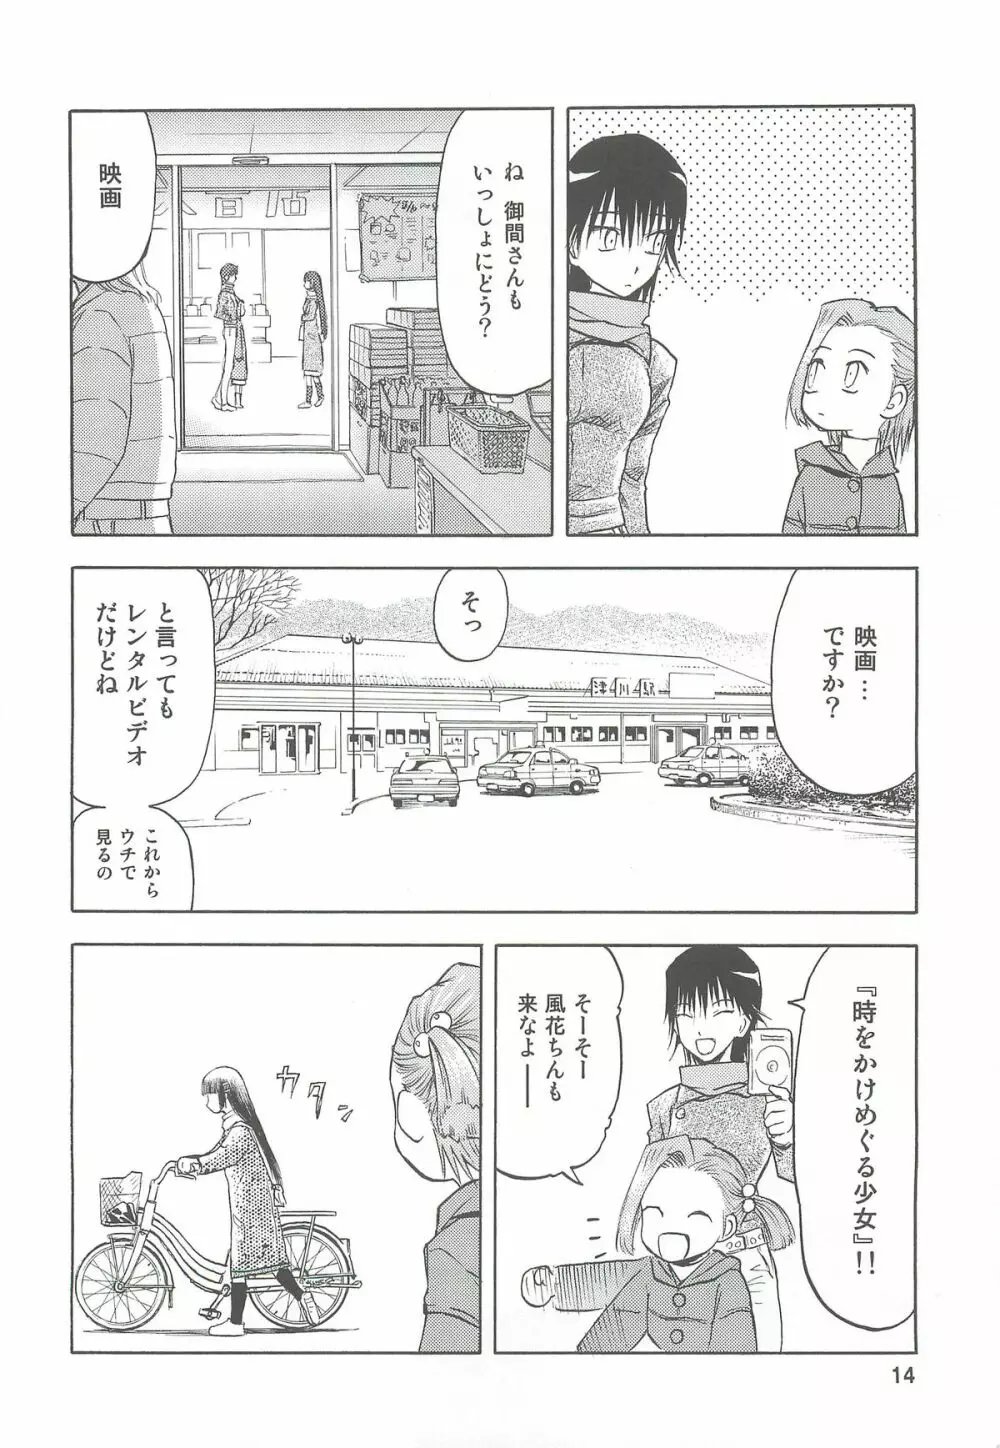 blue snow blue 総集編2 scene.4～scene.6 - page14